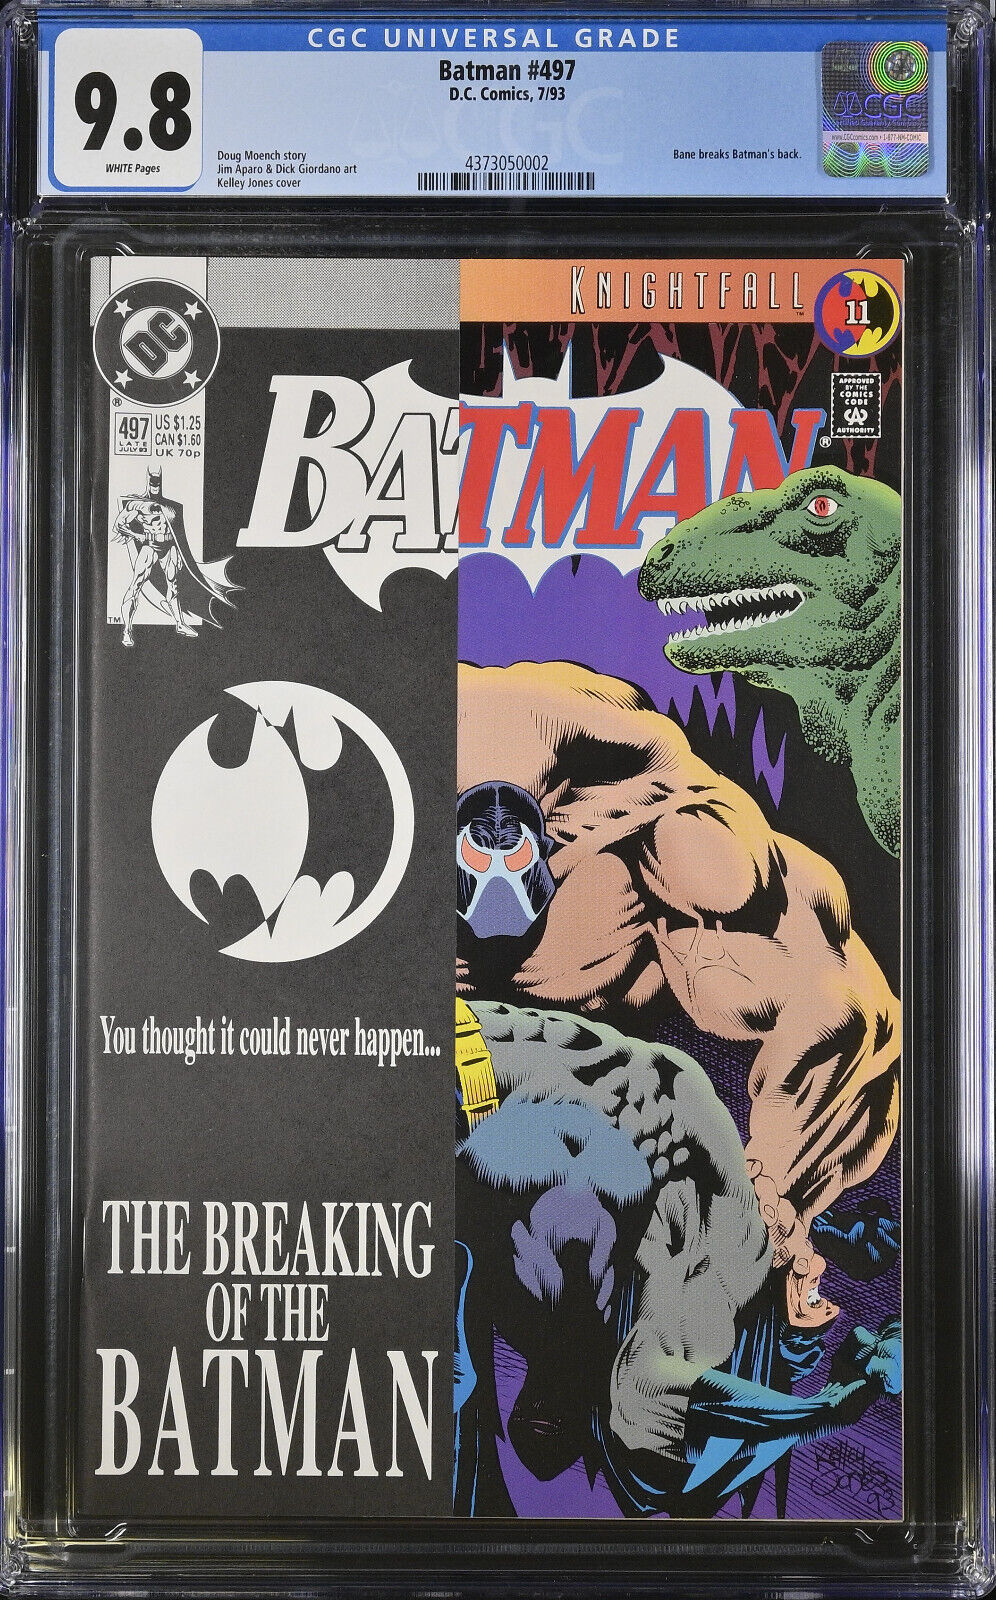 Batman #497 CGC 9.8 NM/MT BANE BREAKS BATMAN'S BACK (KNIGHTFALL 11) KEY, HOT